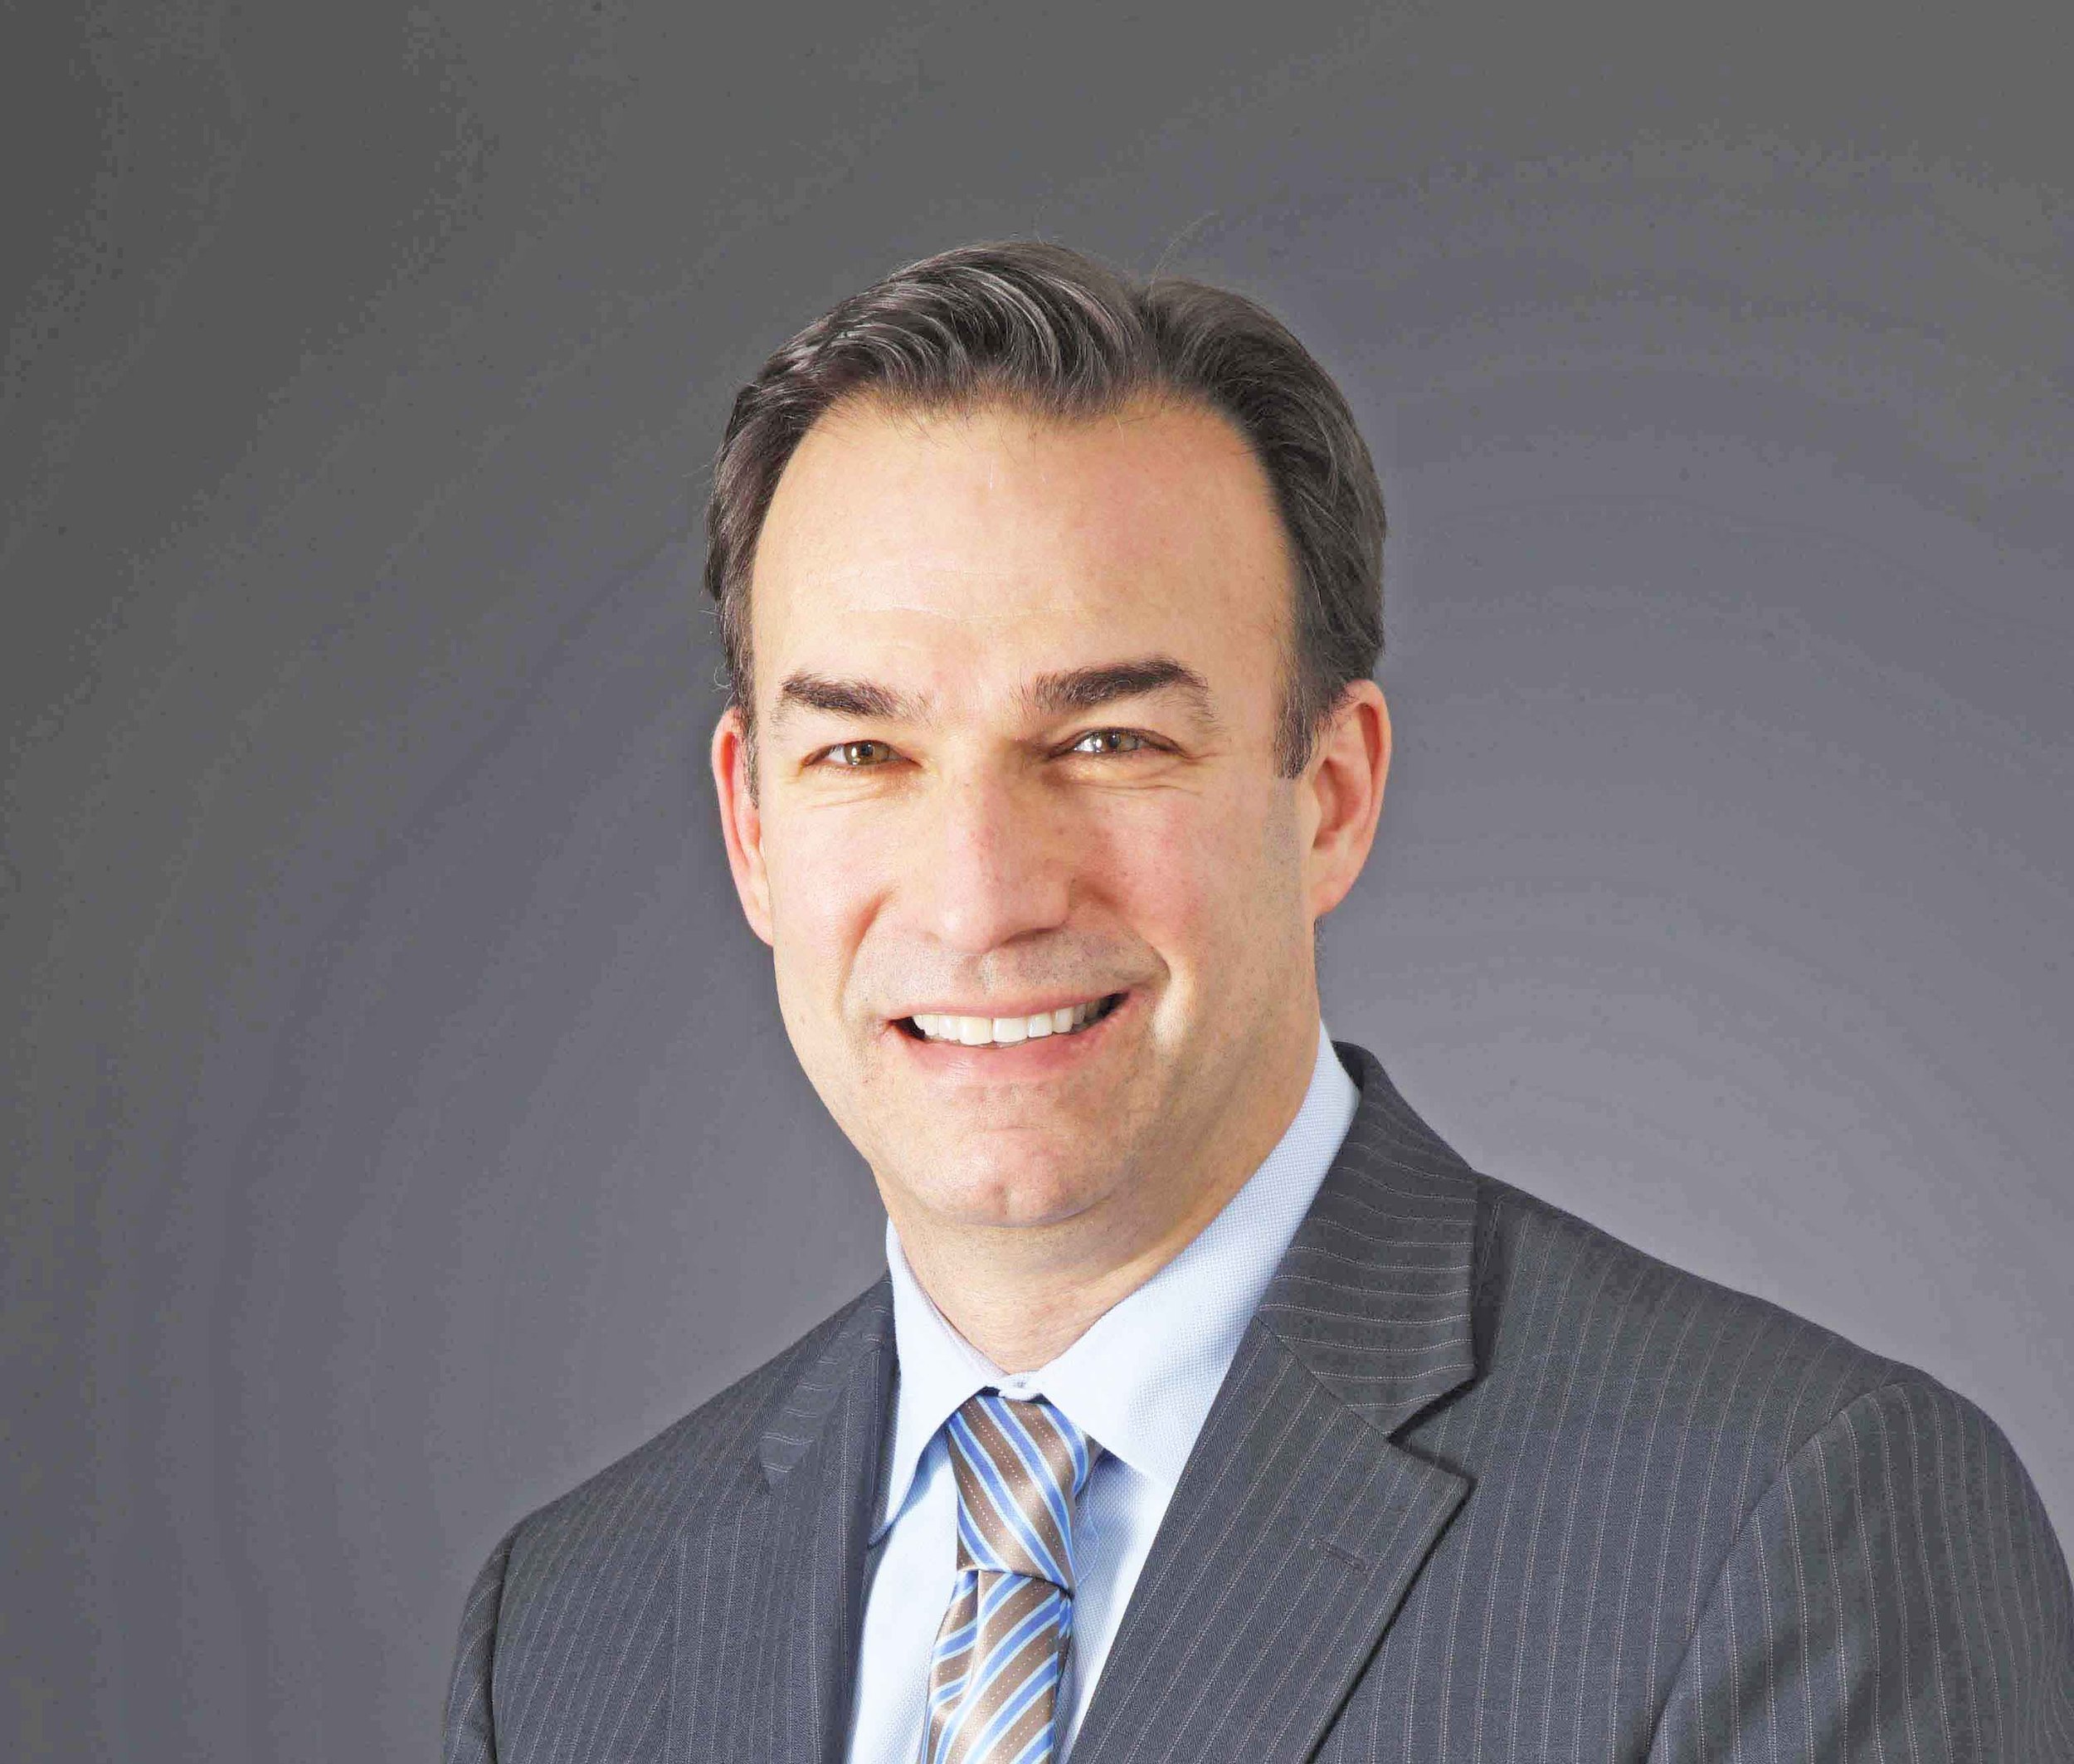 Michael Dubin, Executive Managing Director